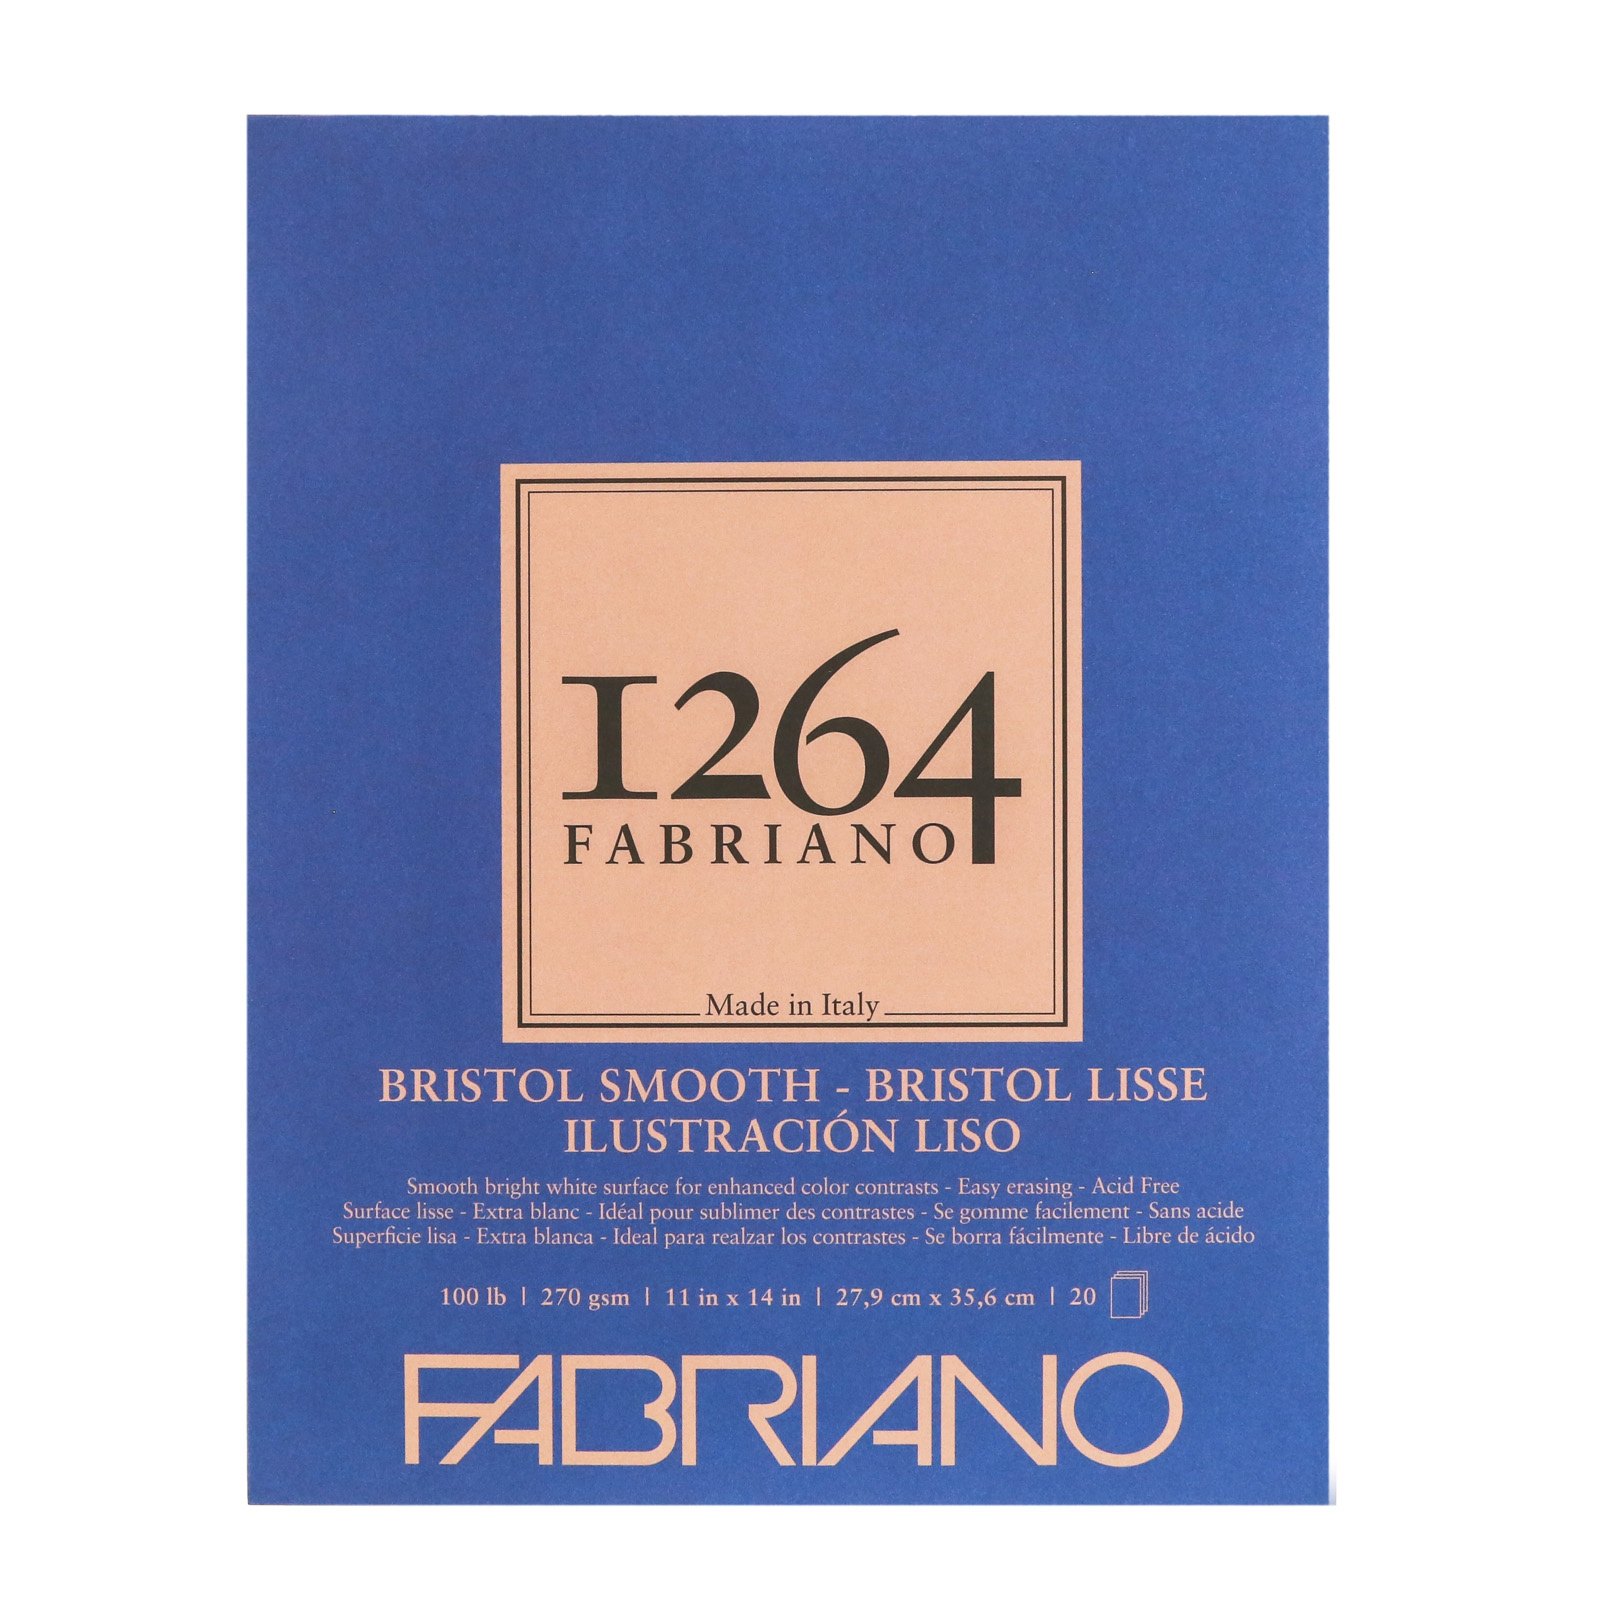 Fabriano 1264 Bristol Pads, Smooth, 11" x 14"